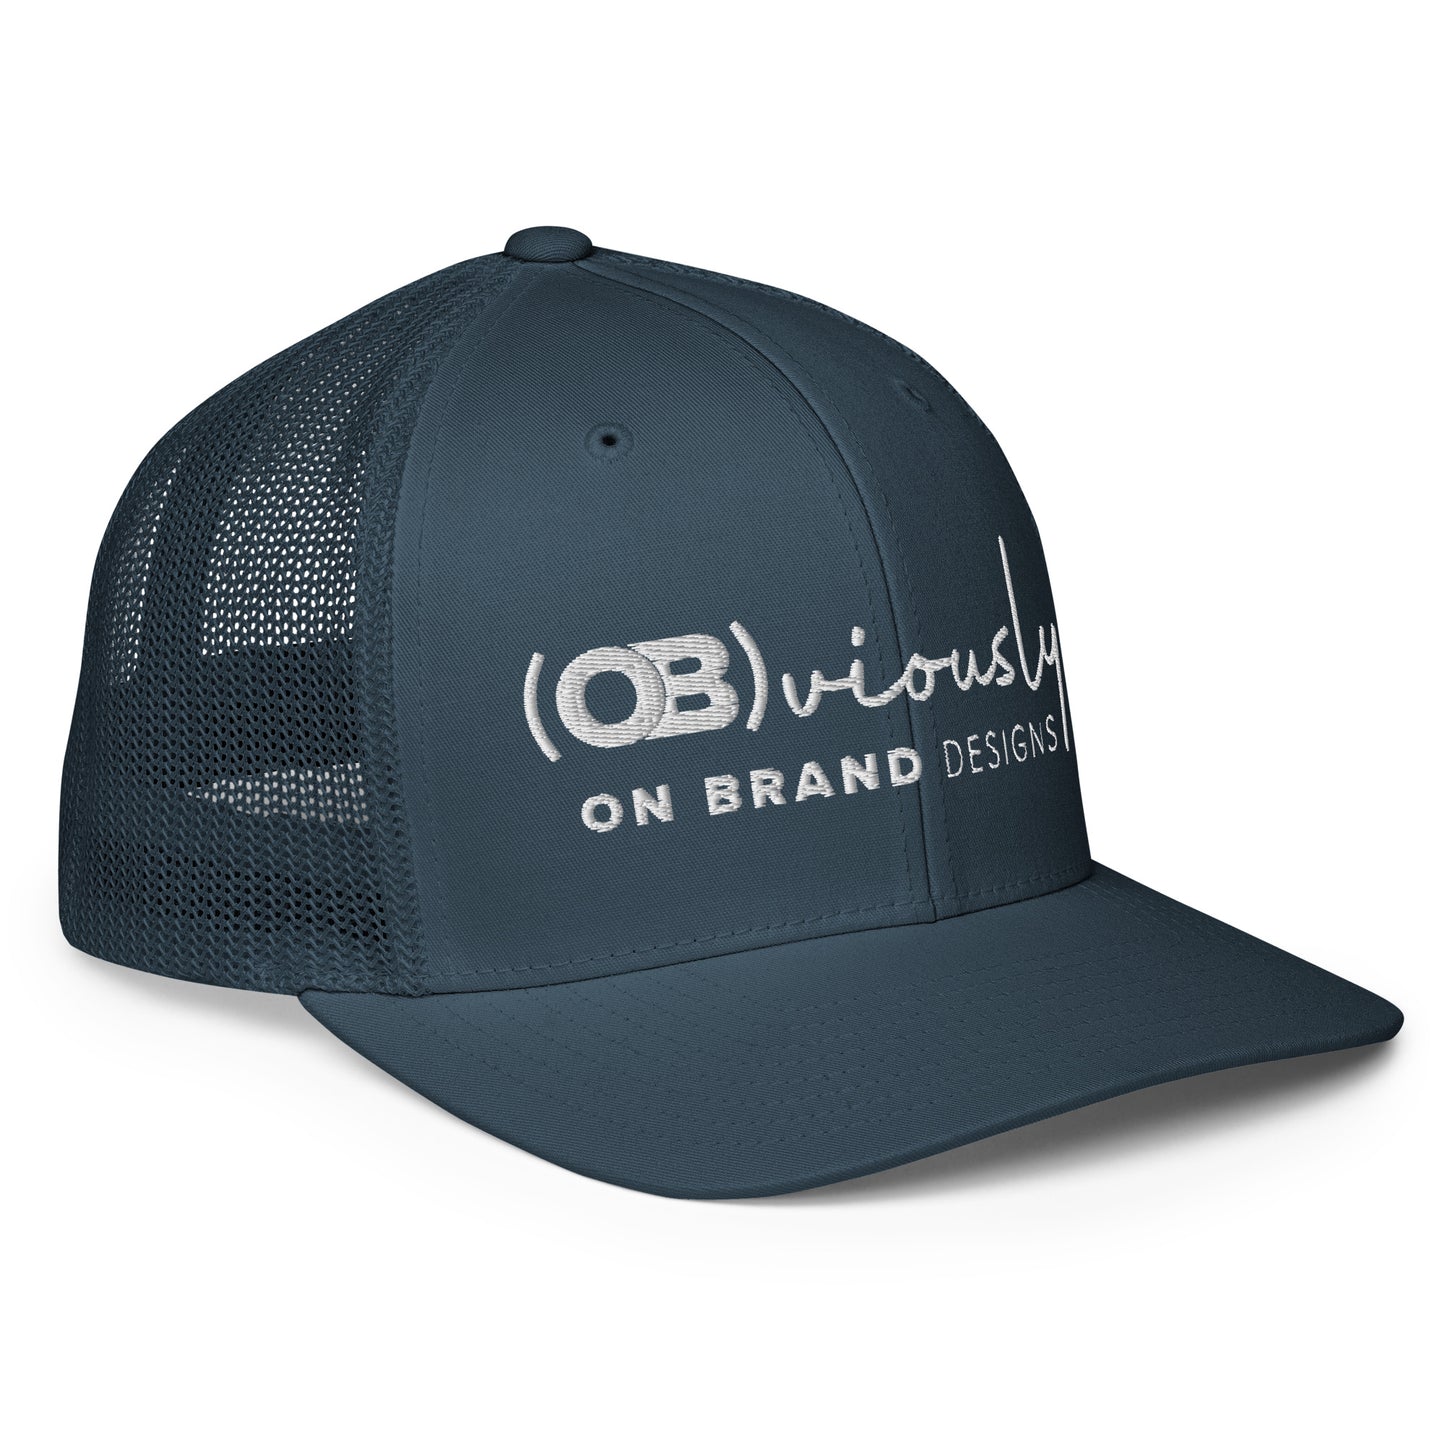 (OB)viously Mesh back trucker cap